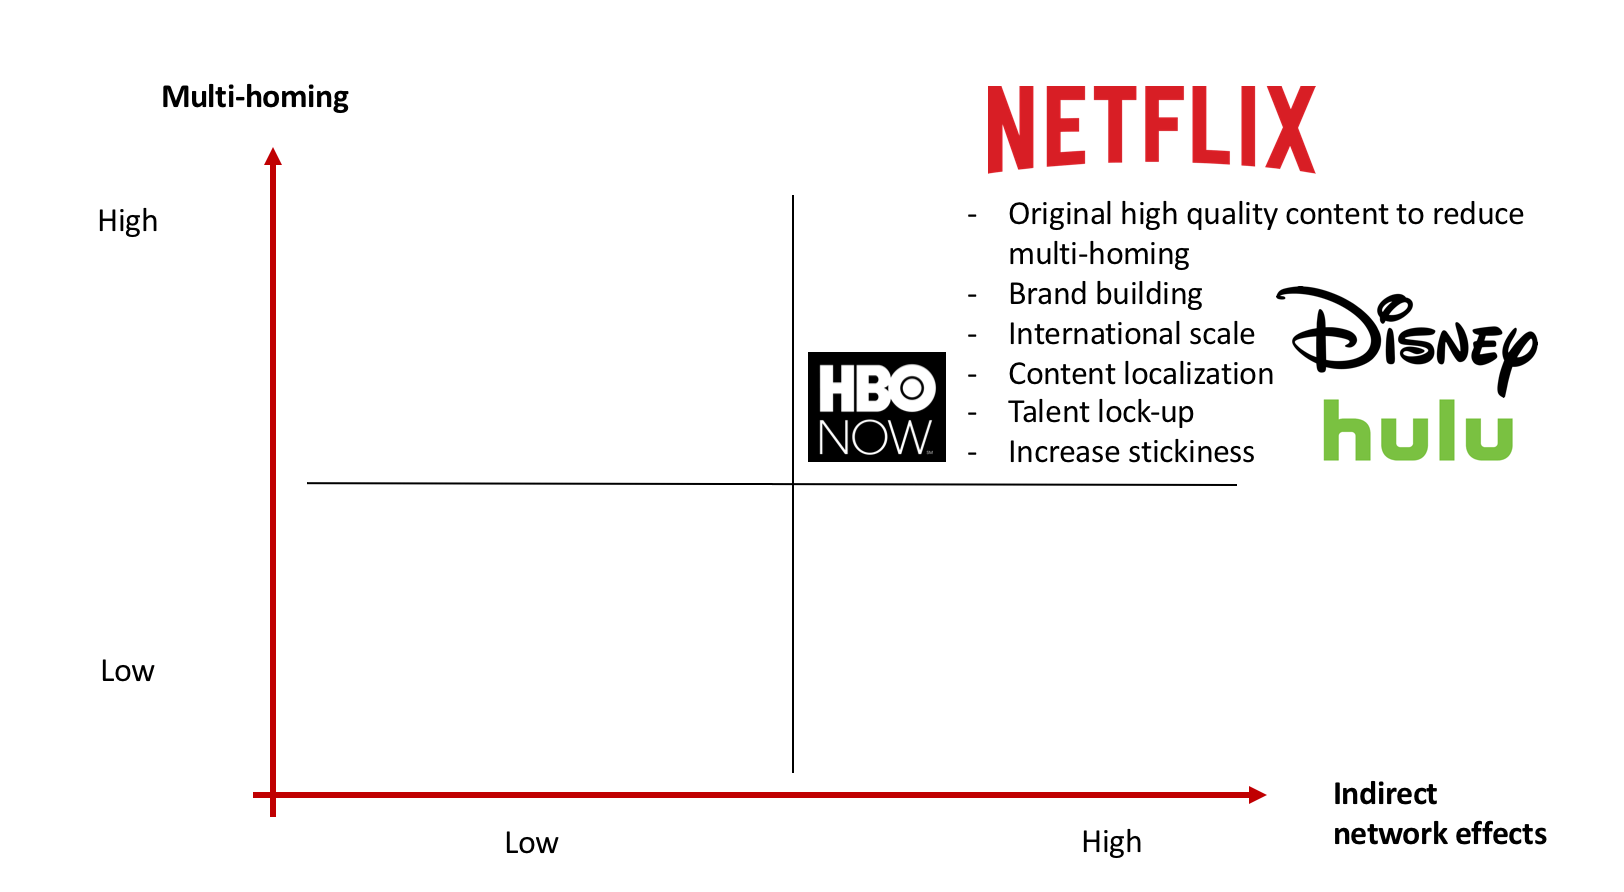 Is Netflix a digital platform?